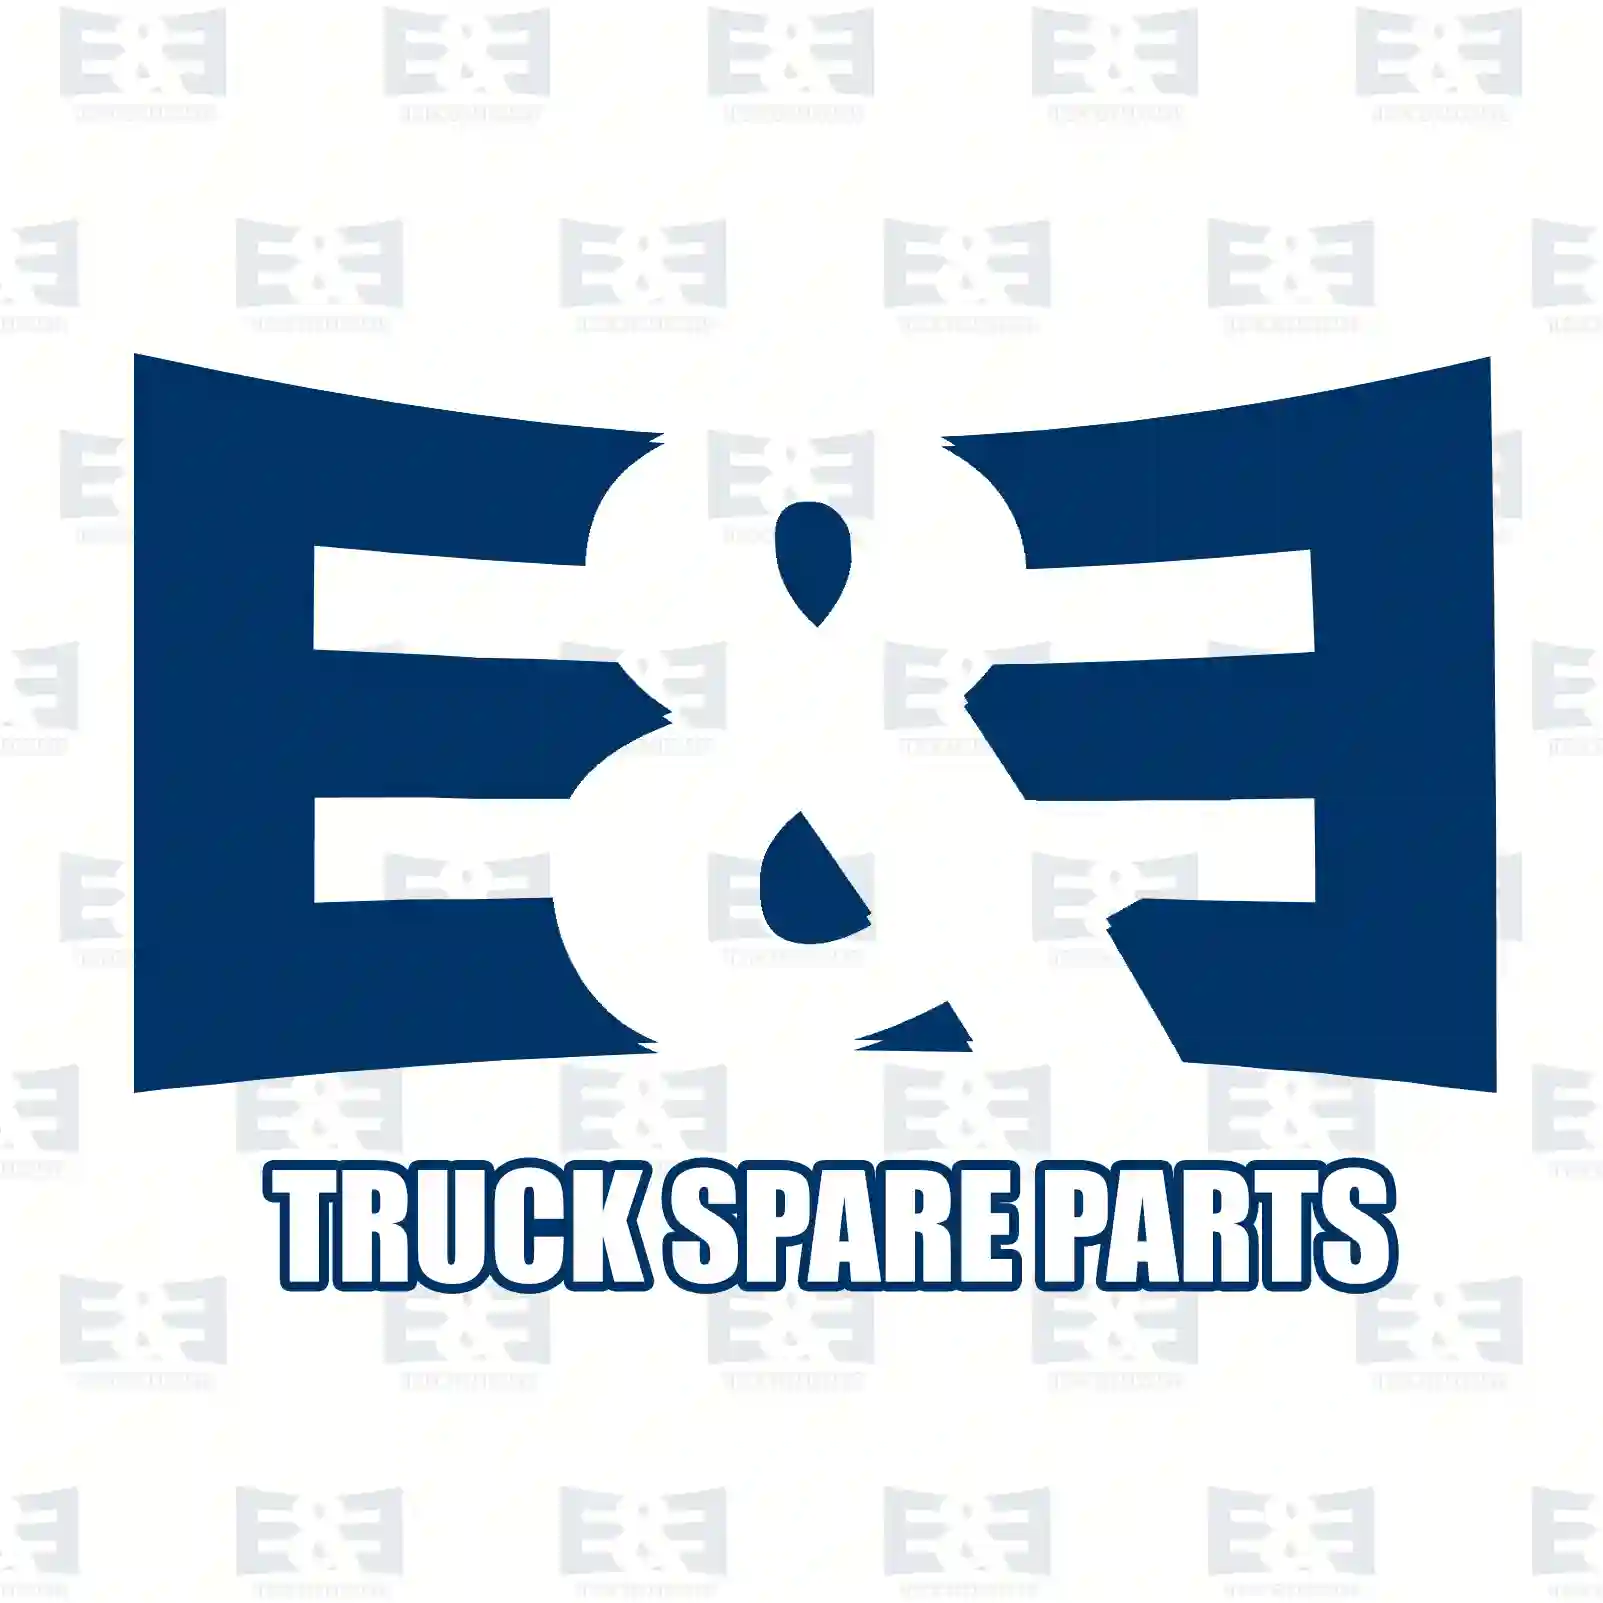 Drum brake lining kit, axle kit, 2E2296593, 81502006805, 81502210619, 81502210676, 81502216003, 81502216028, 81502216040, 81502216049, 81502216049S, 31937080NQT ||  2E2296593 E&E Truck Spare Parts | Truck Spare Parts, Auotomotive Spare Parts Drum brake lining kit, axle kit, 2E2296593, 81502006805, 81502210619, 81502210676, 81502216003, 81502216028, 81502216040, 81502216049, 81502216049S, 31937080NQT ||  2E2296593 E&E Truck Spare Parts | Truck Spare Parts, Auotomotive Spare Parts